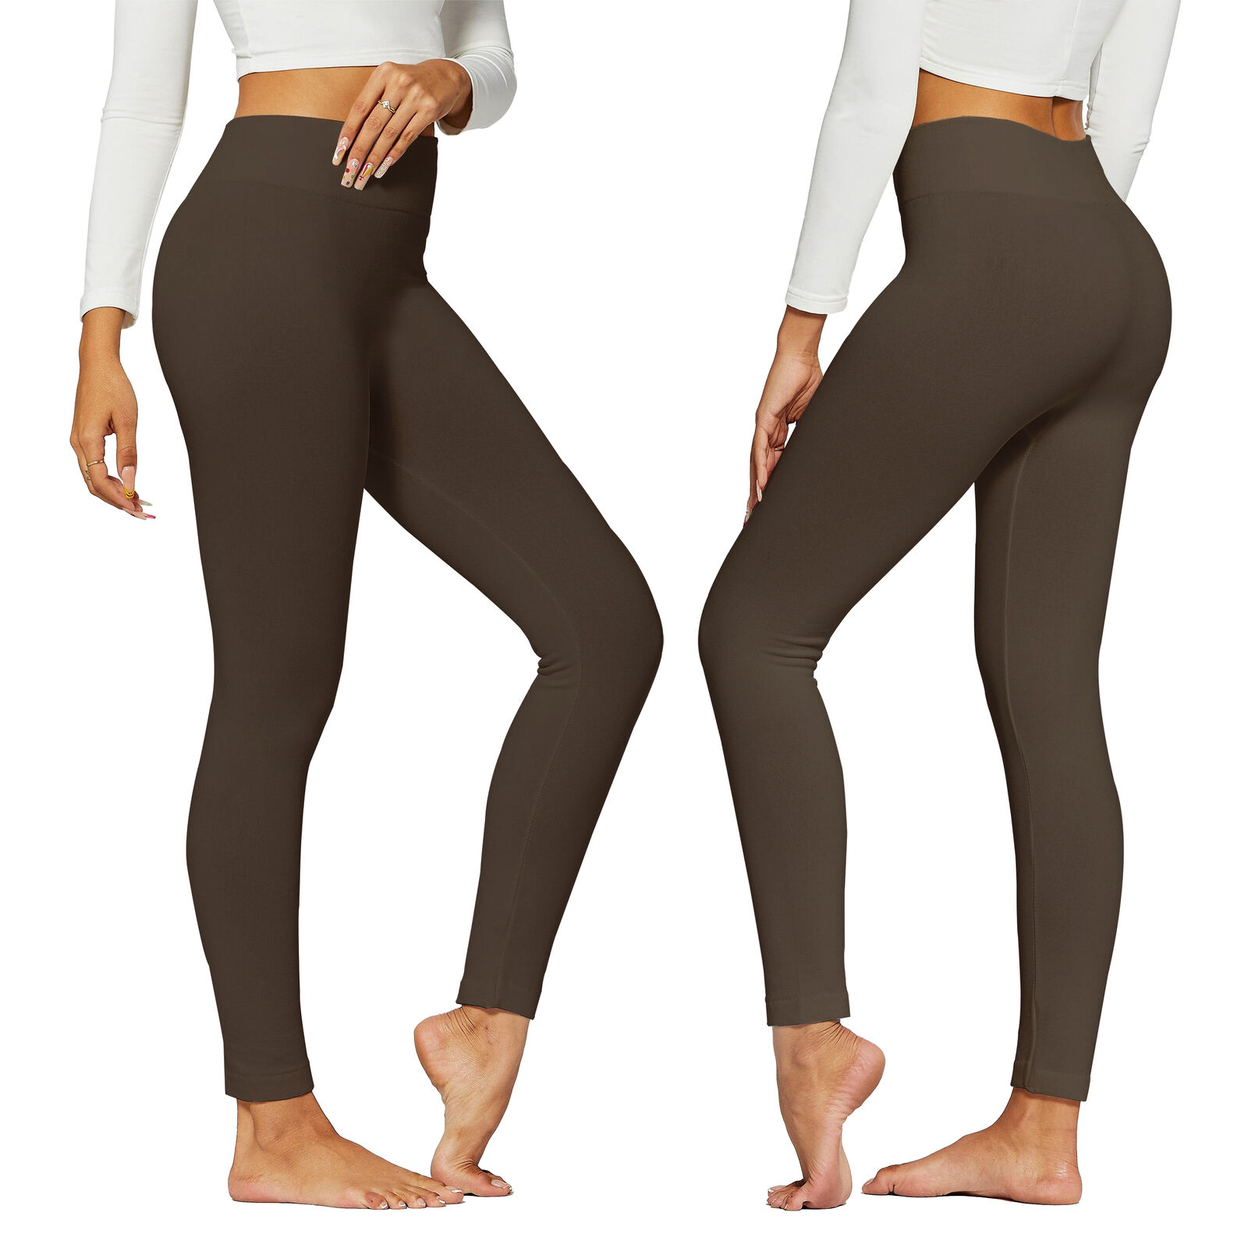 2-Pack: Women's Winter Warm High-Waist Soft Fleece Lined Leggings - Black & Brown, Large